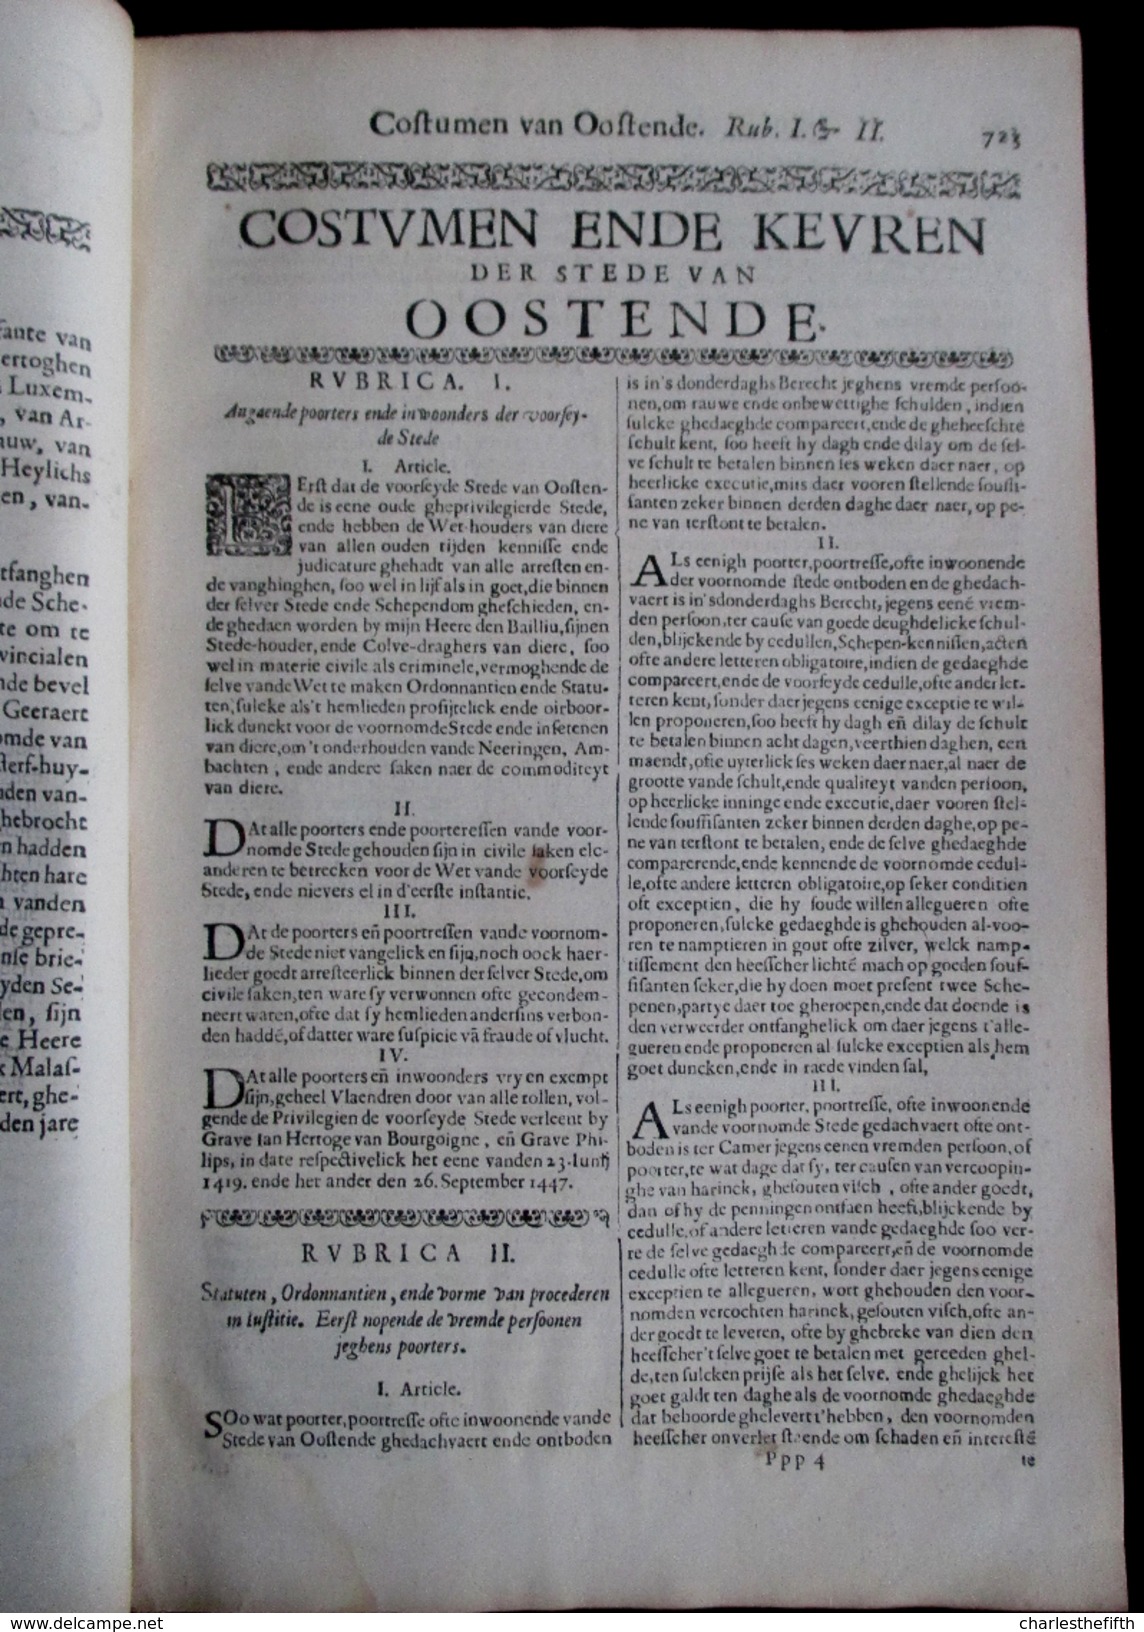 COSTUMEN ENDE KEUREN DER STEDE VAN OOSTENDE By MICHIEL KNOBBAERT ( Volledig Deel Over Oostende ) Herdruckt  't Jaer 1674 - Anciens